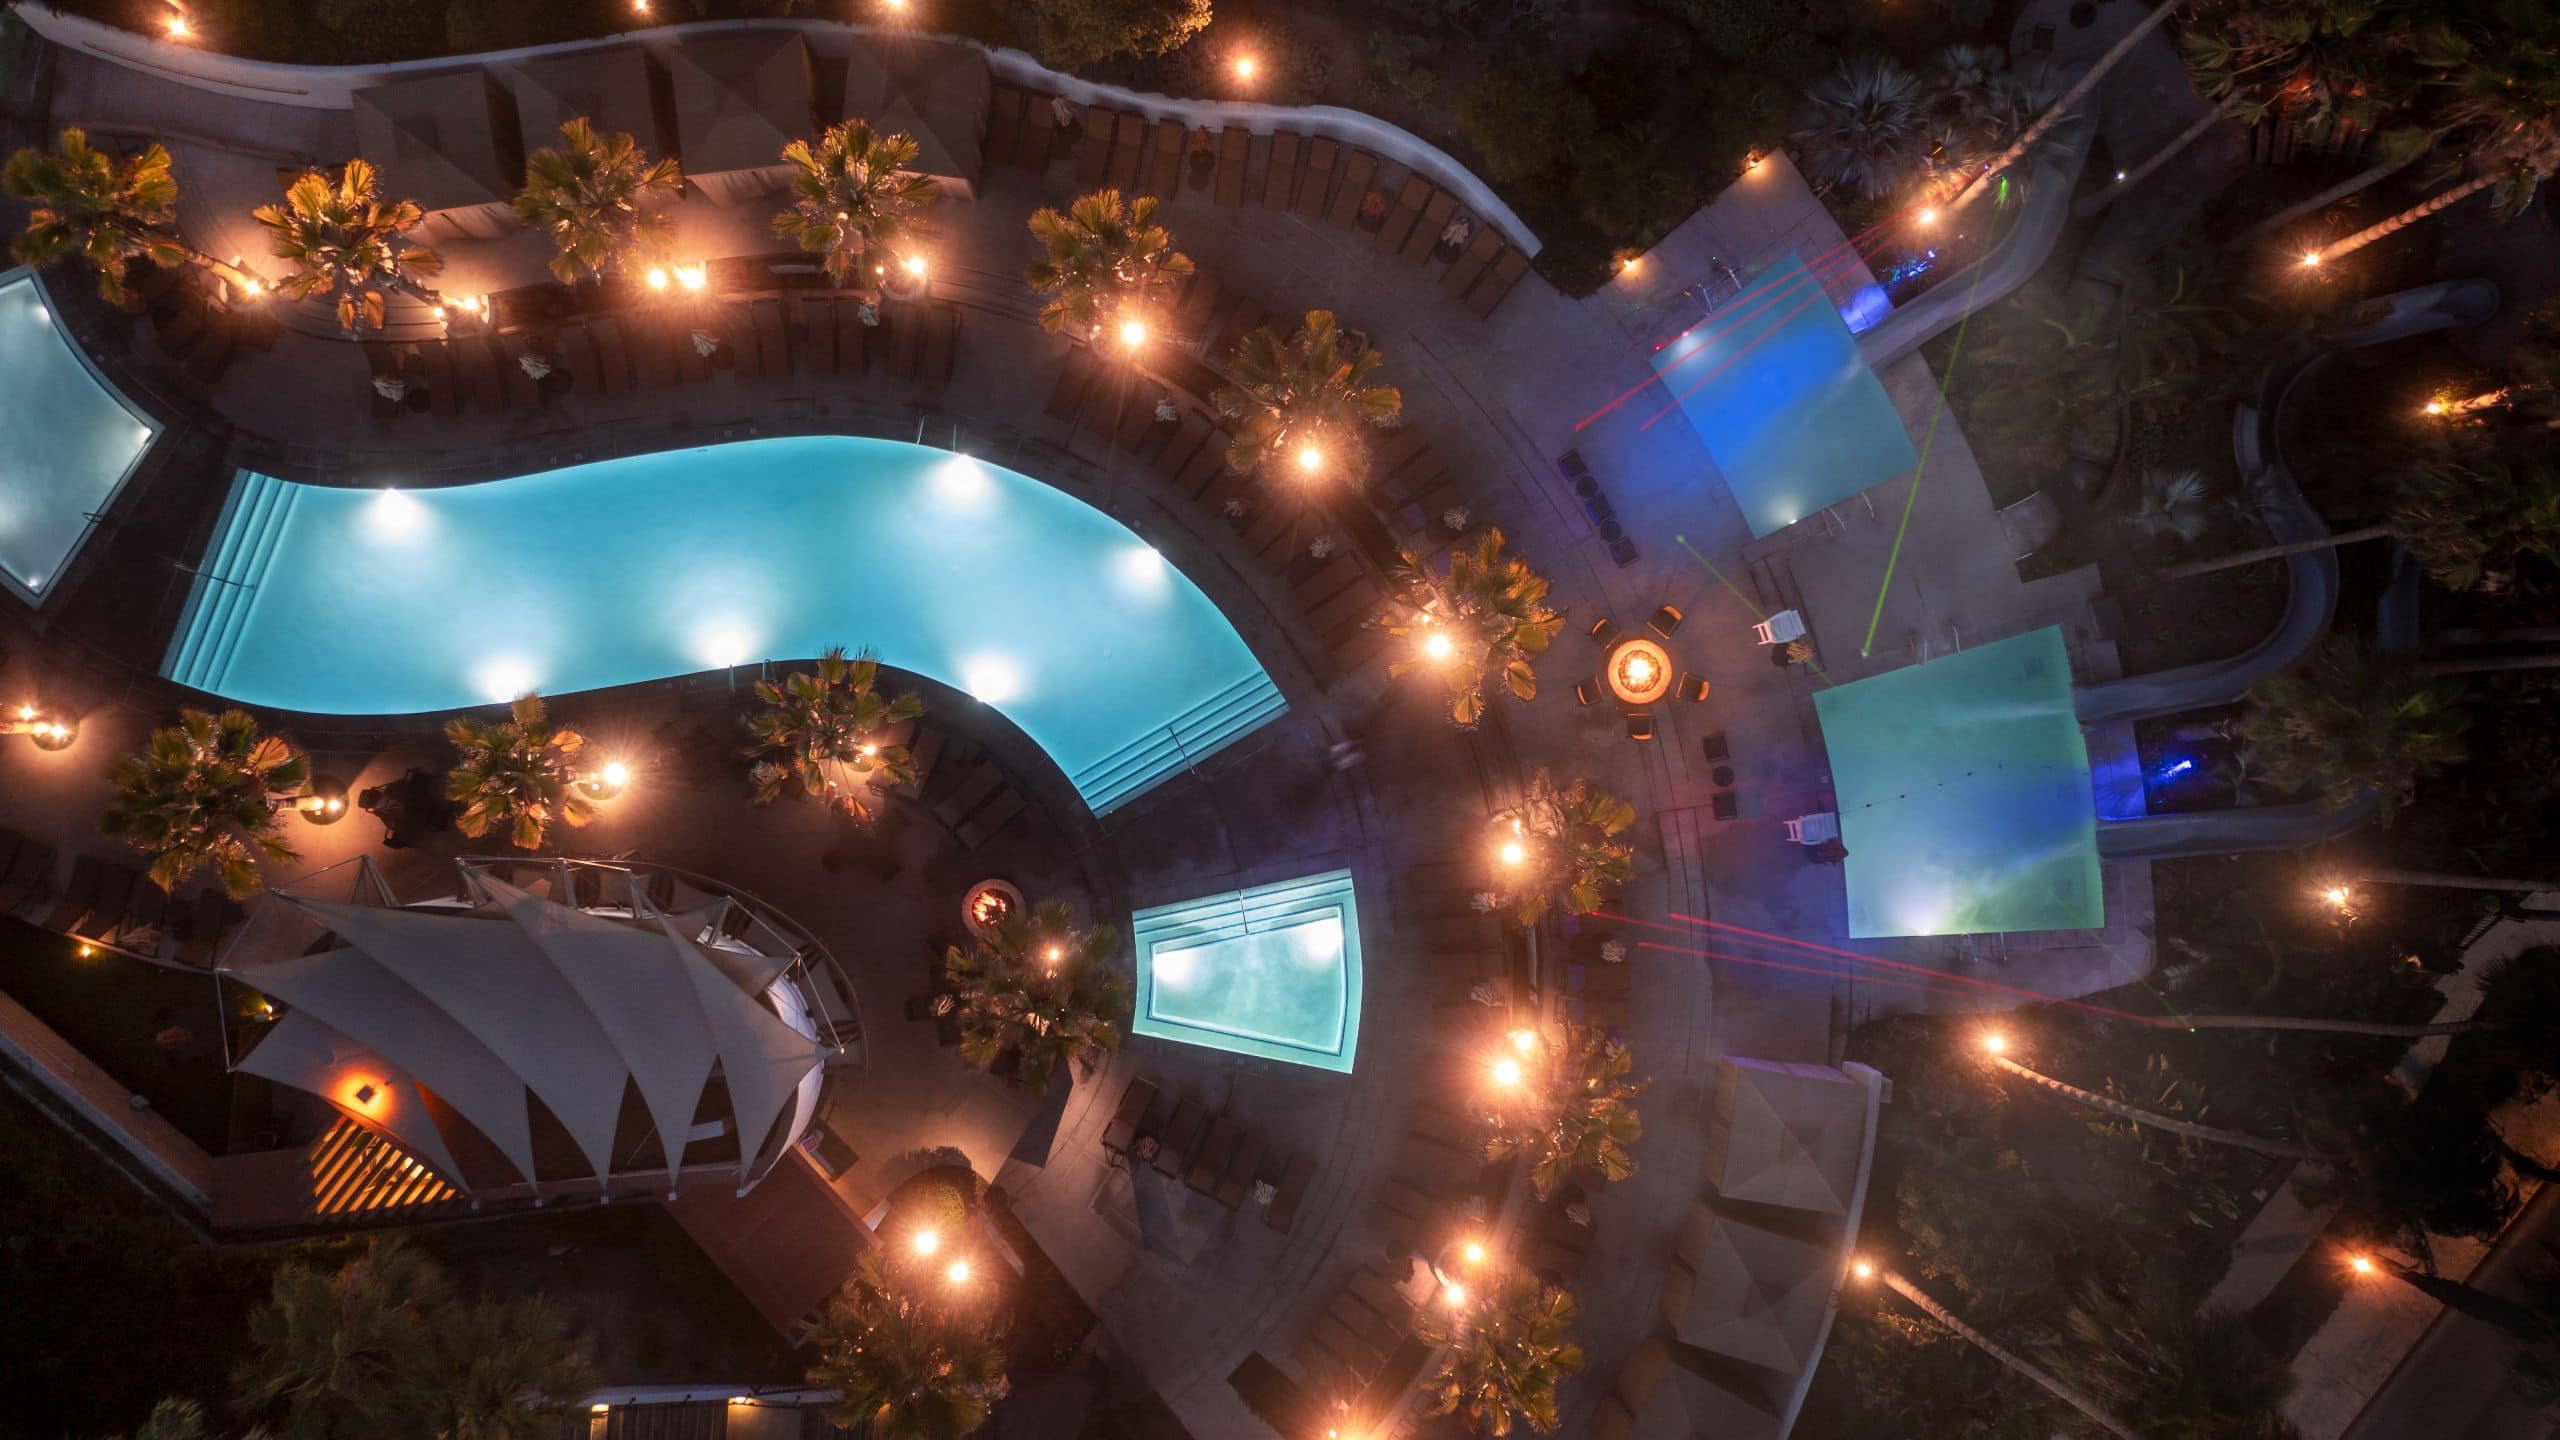 Hyatt Regency Huntington Beach Resort and Spa Drone Pool Overview